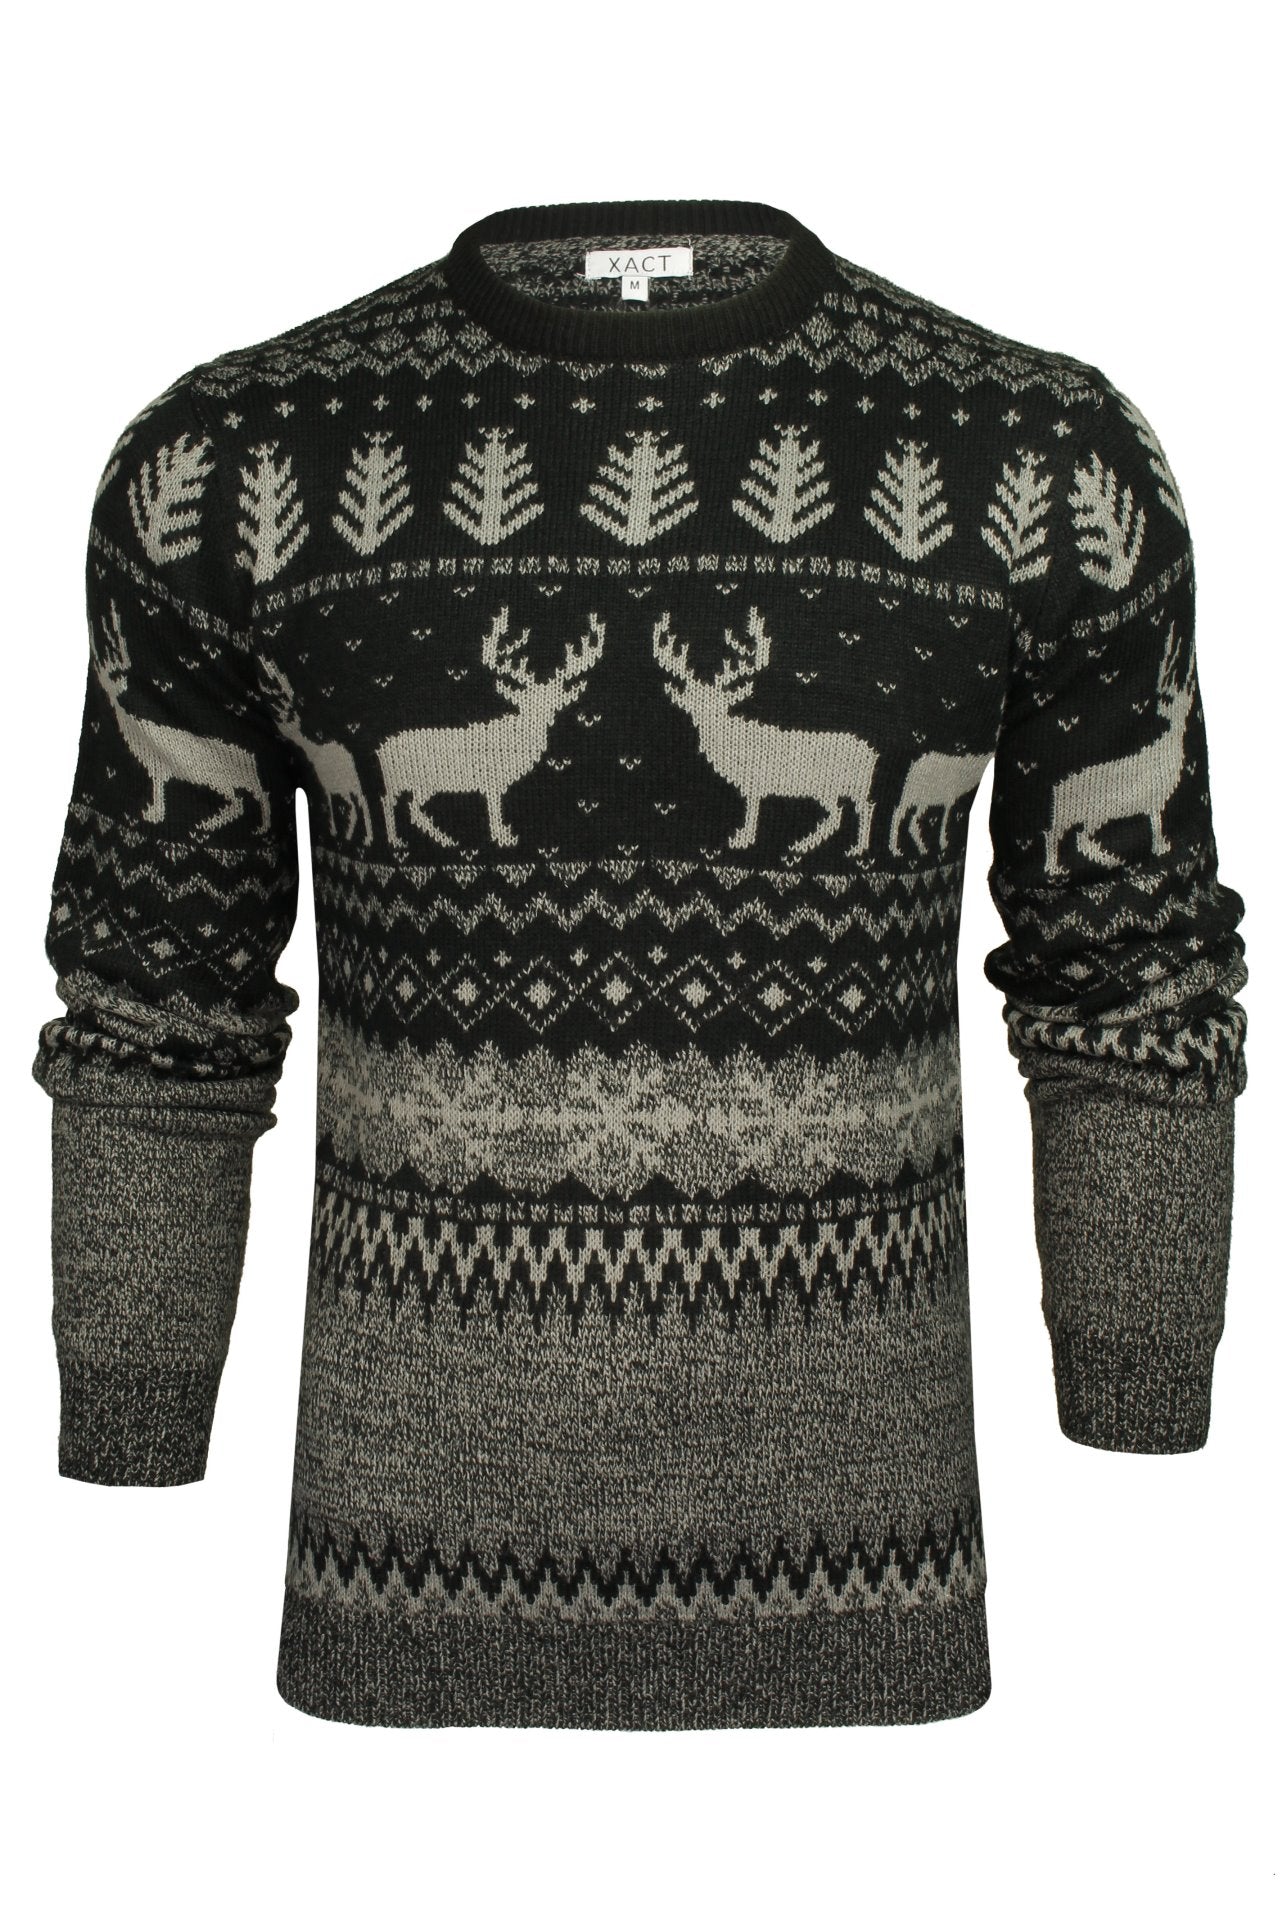 Xact Men's Nordic 'Reindeer' Xmas/ Christmas Jumper-Main Image